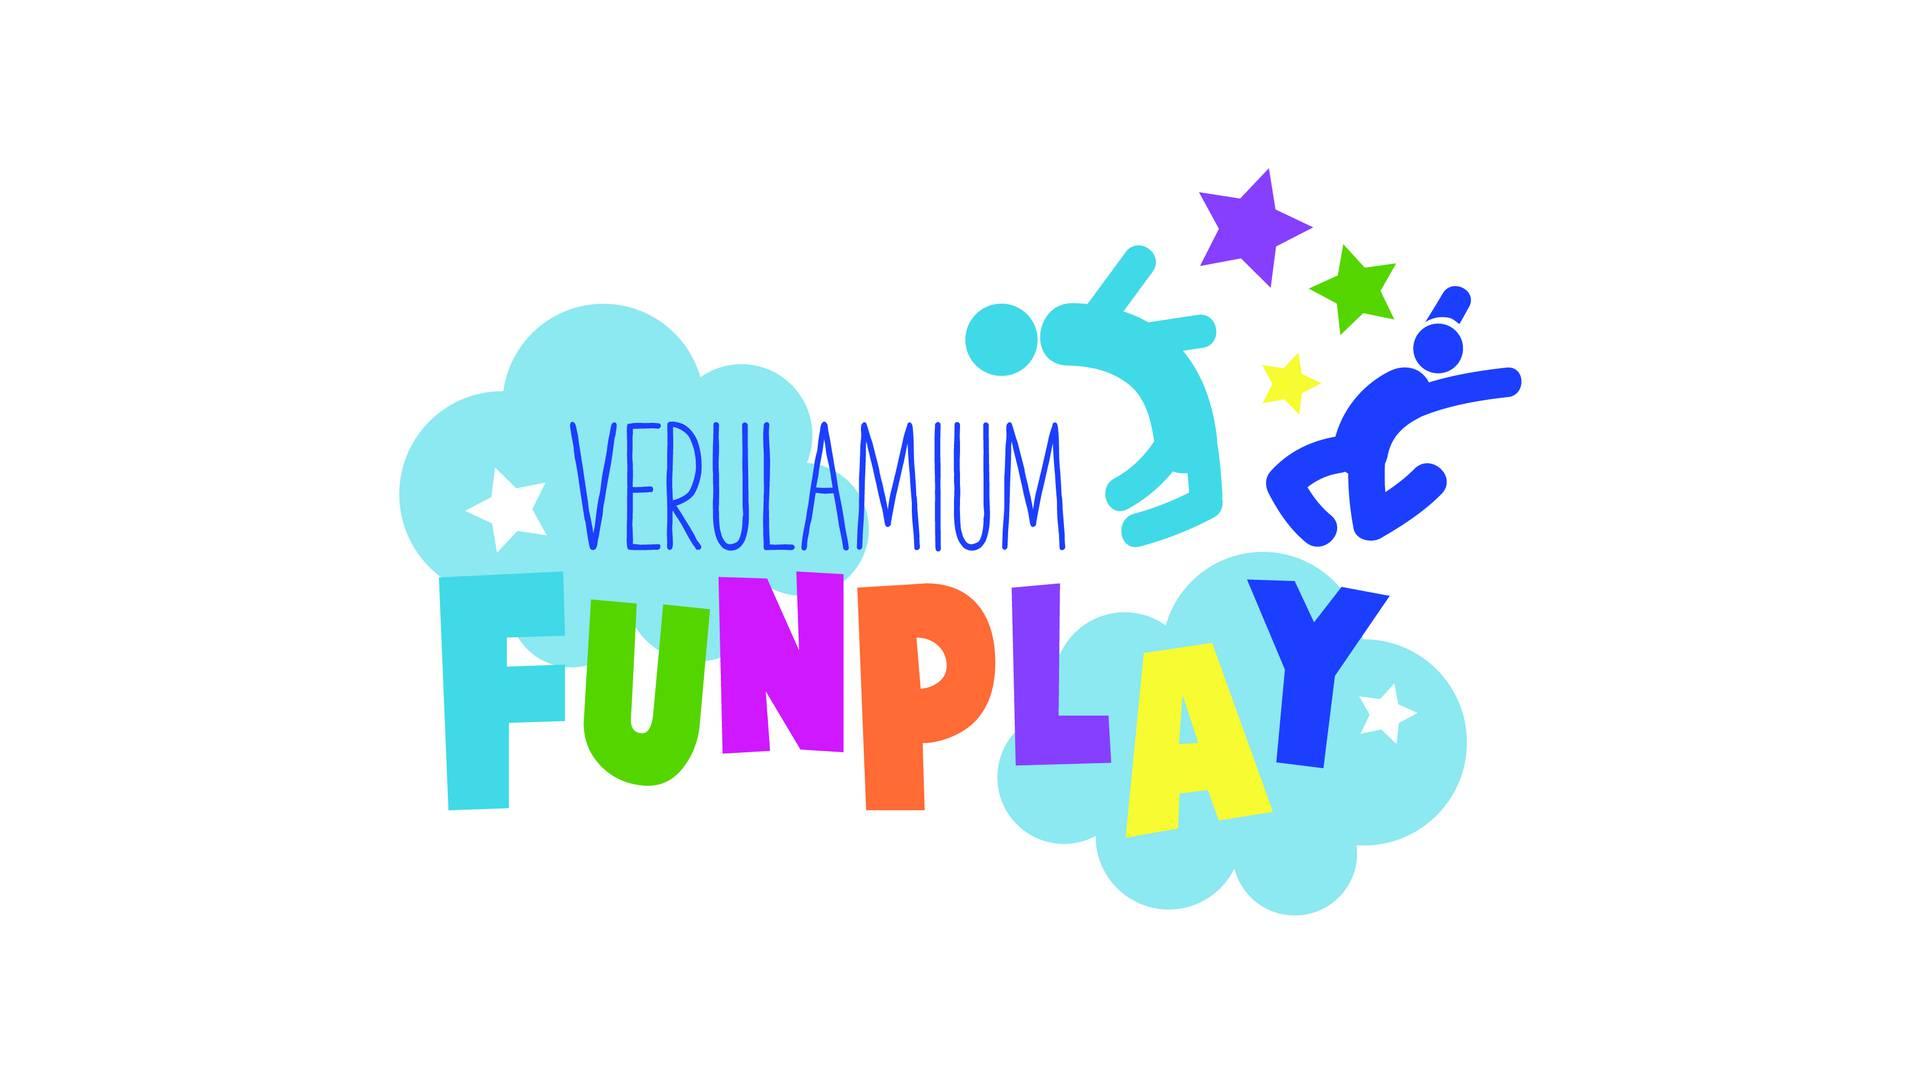 Verulamium FunPlay photo